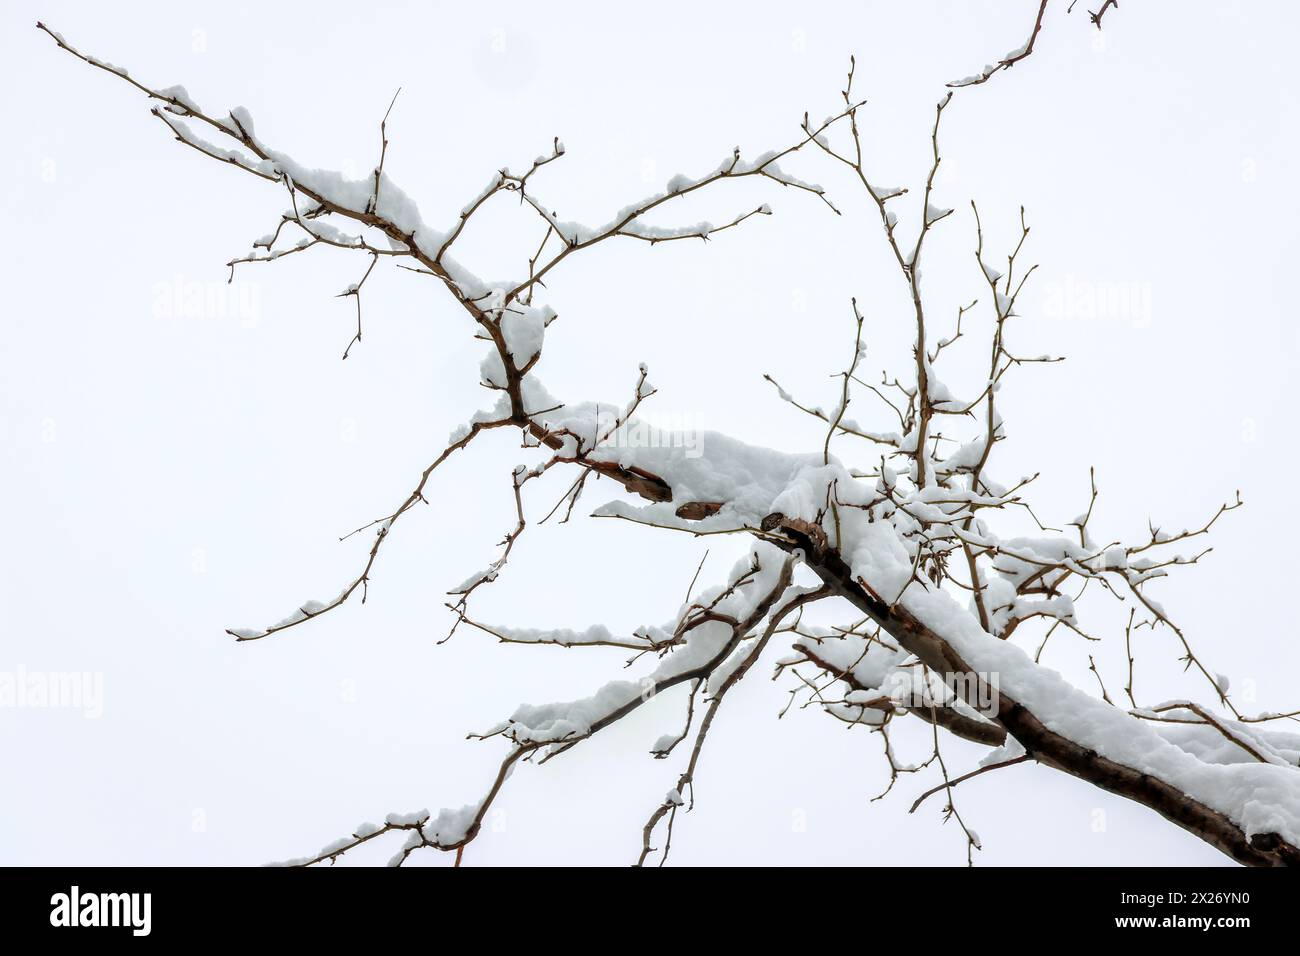 Huaxian County, Provinz Henan: Silberbedeckte Bäume nach Schnee Stockfoto